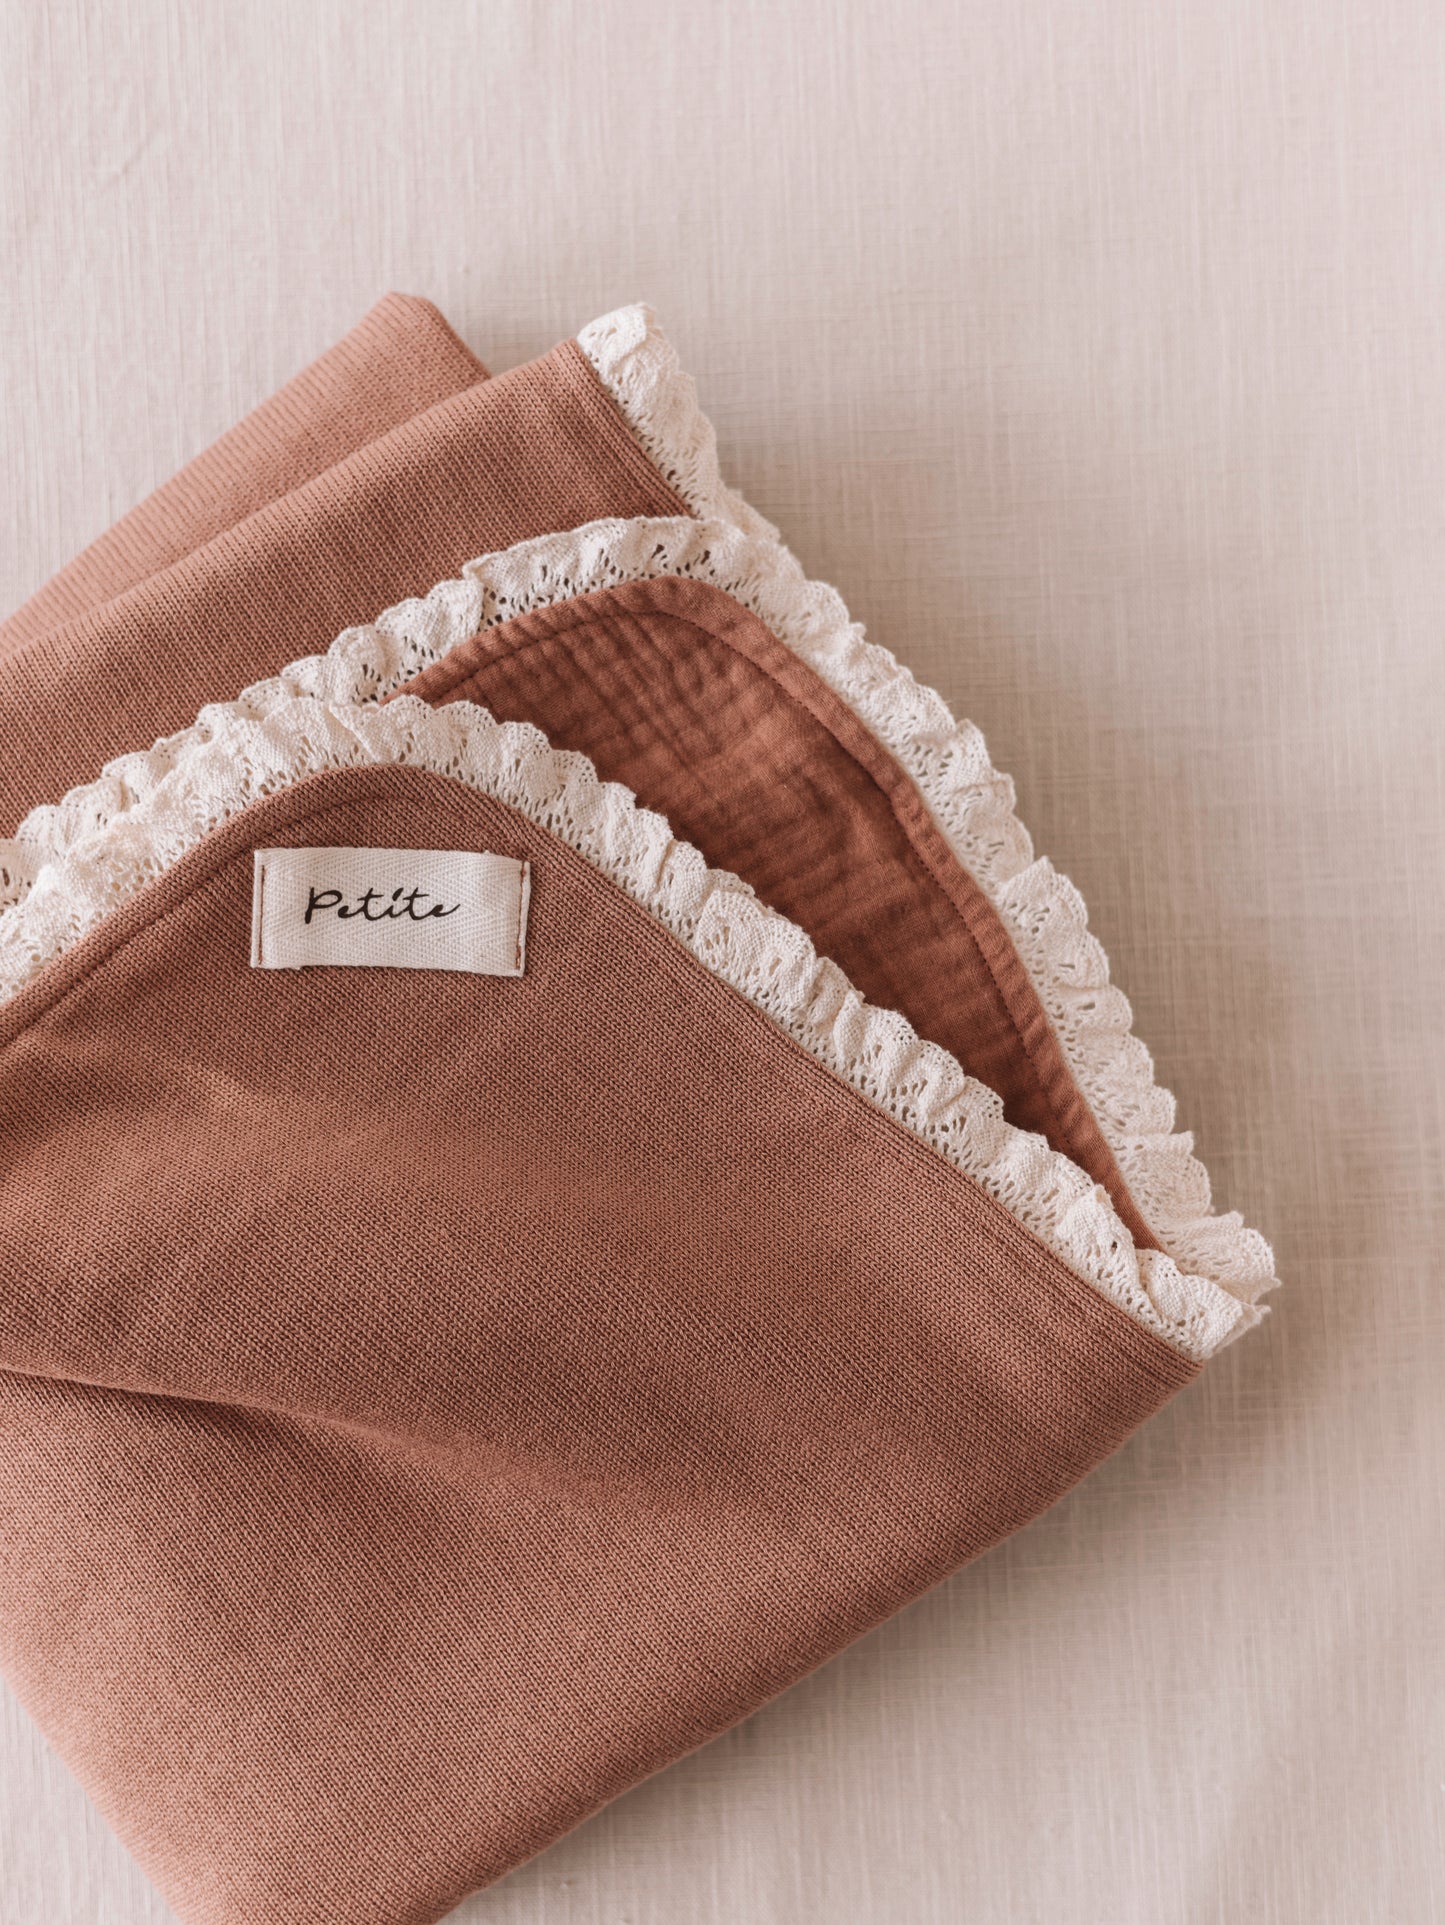 Knit + Muslin Blanket /  clay + lace